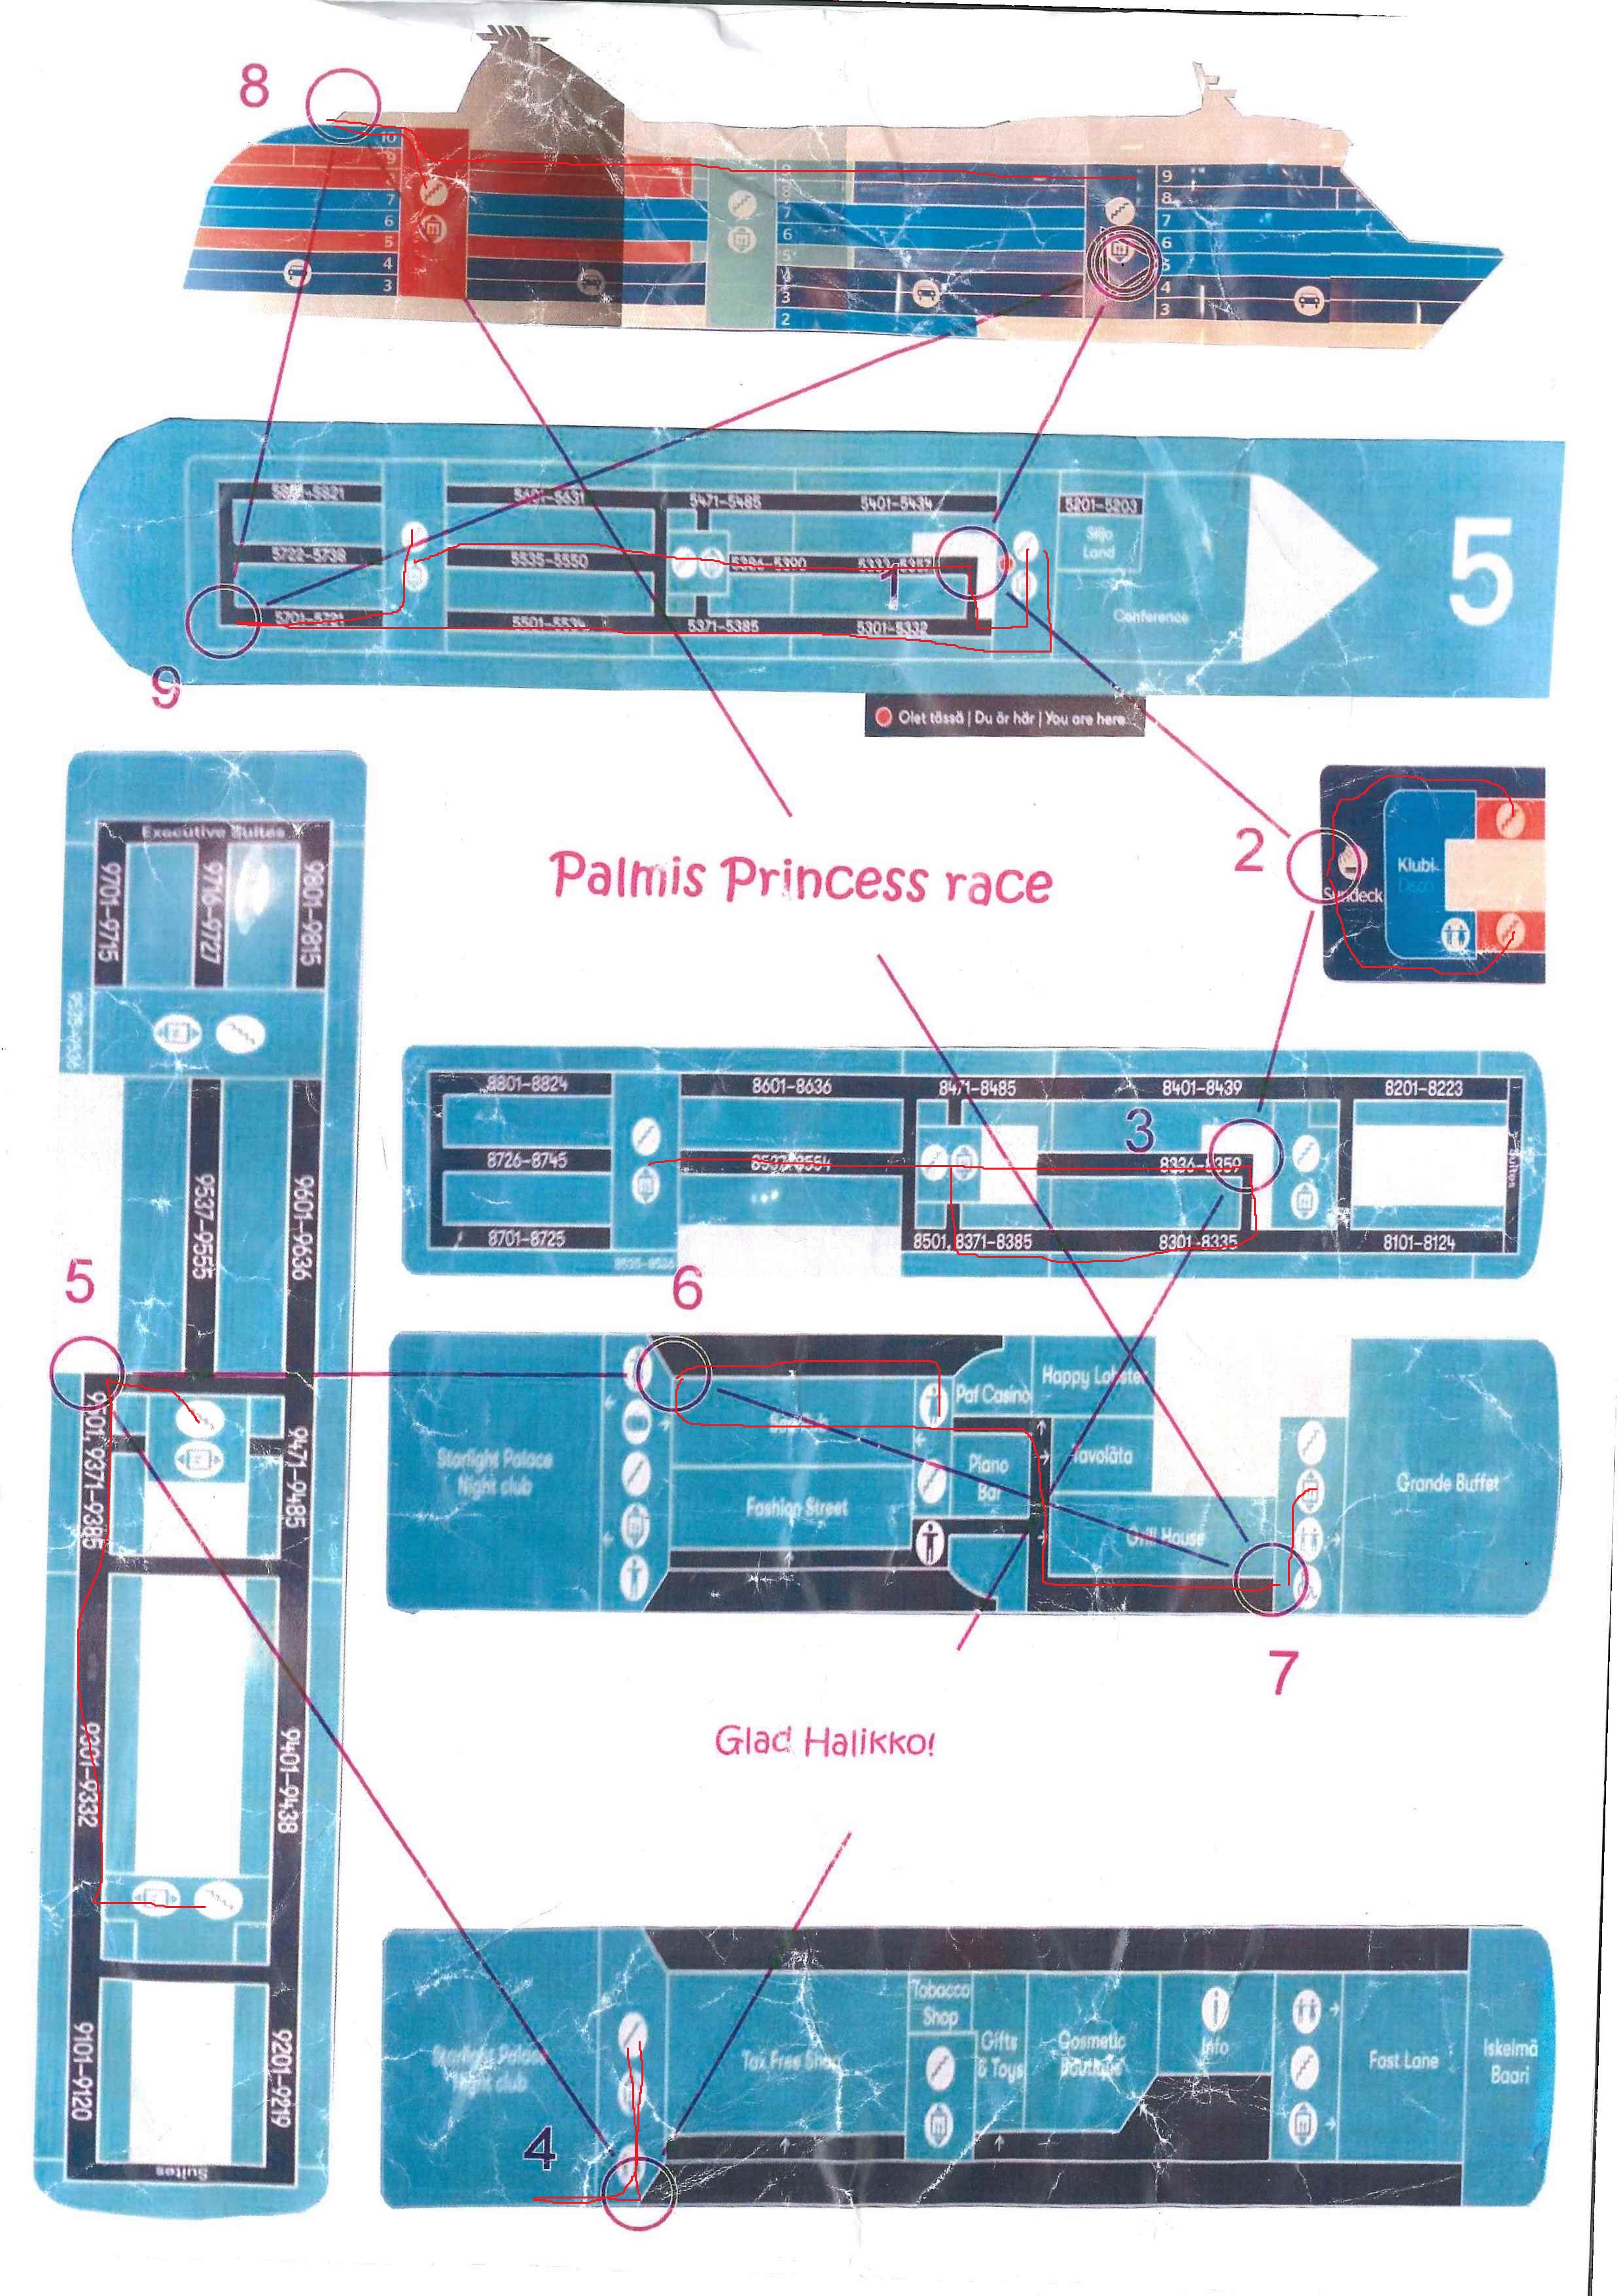 Palmis Princess race by Pasta20 (2018-10-13)